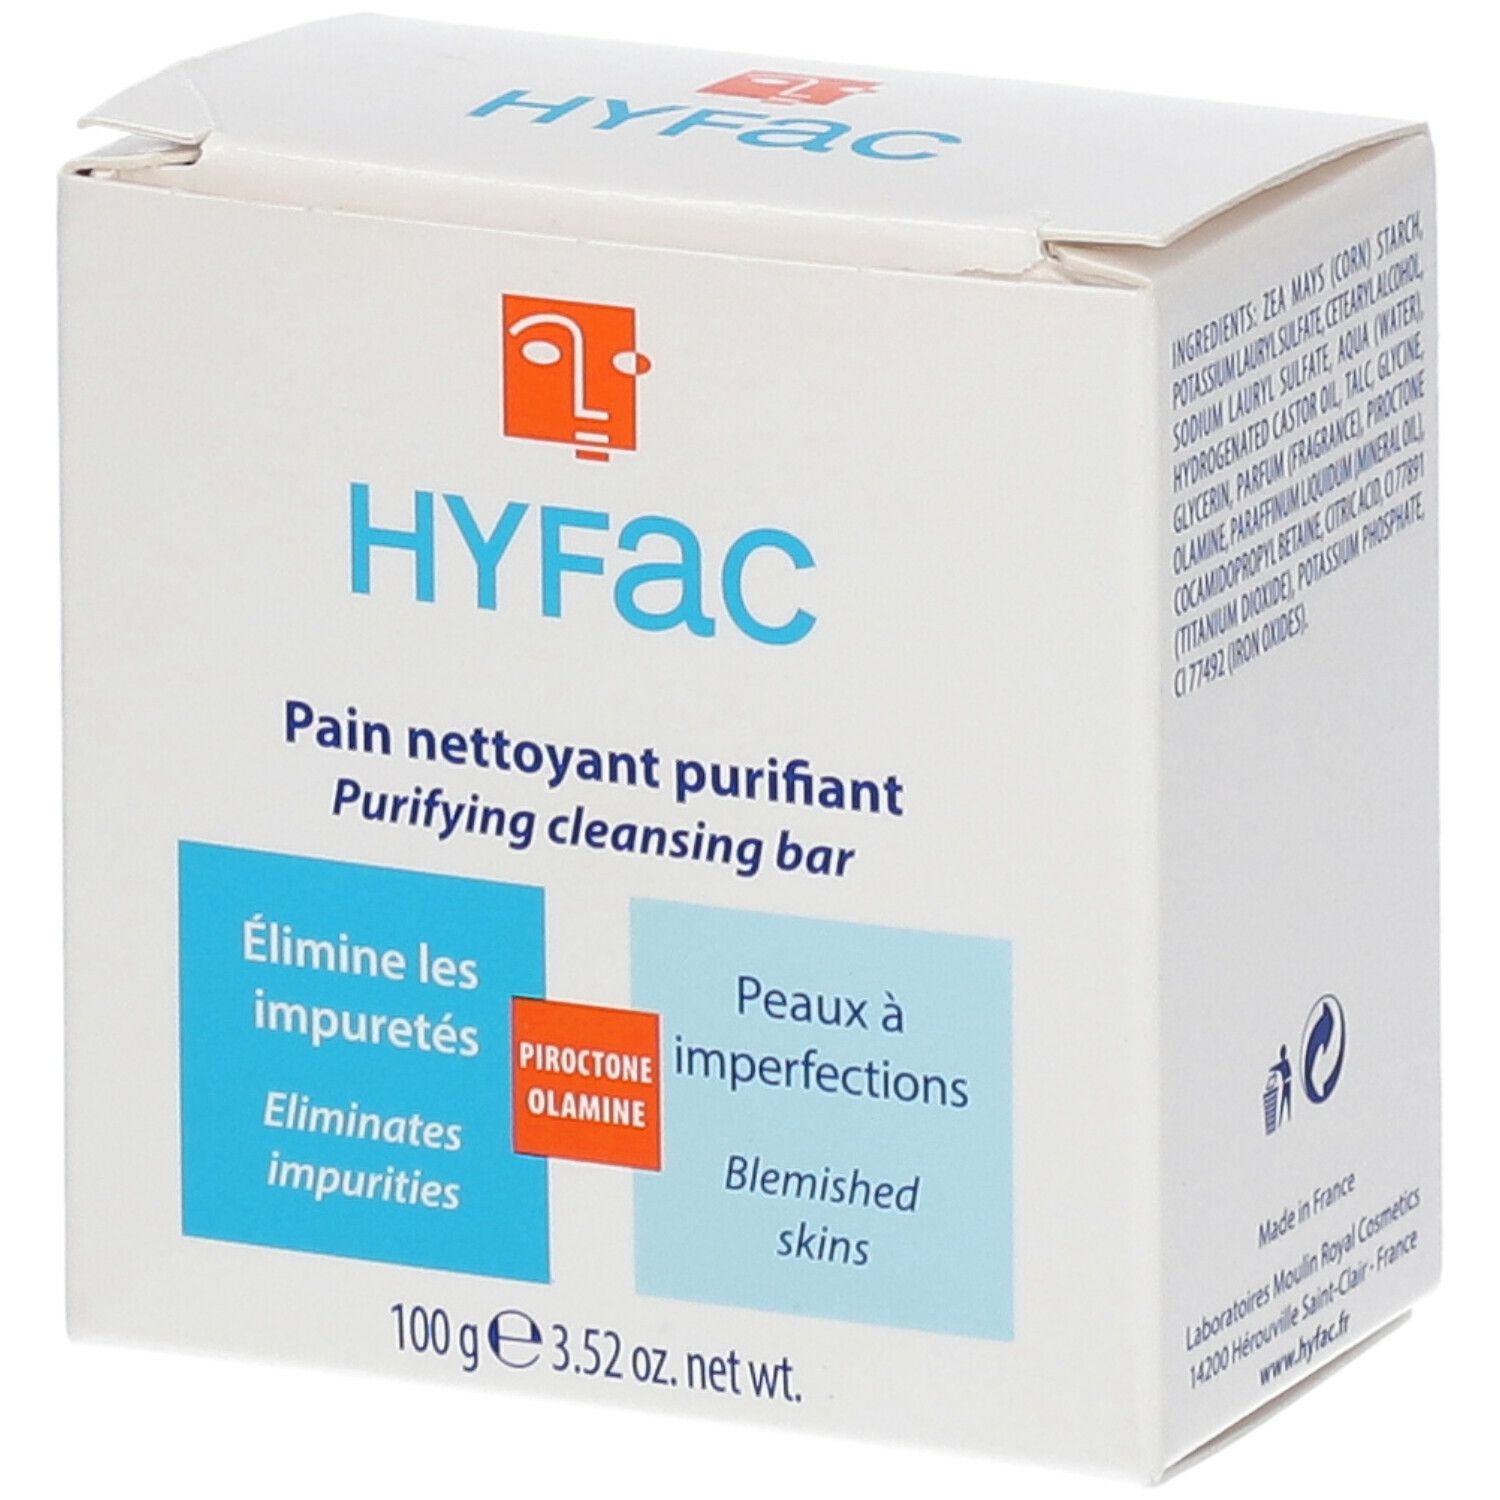 Hyfac Pain nettoyant purifiant